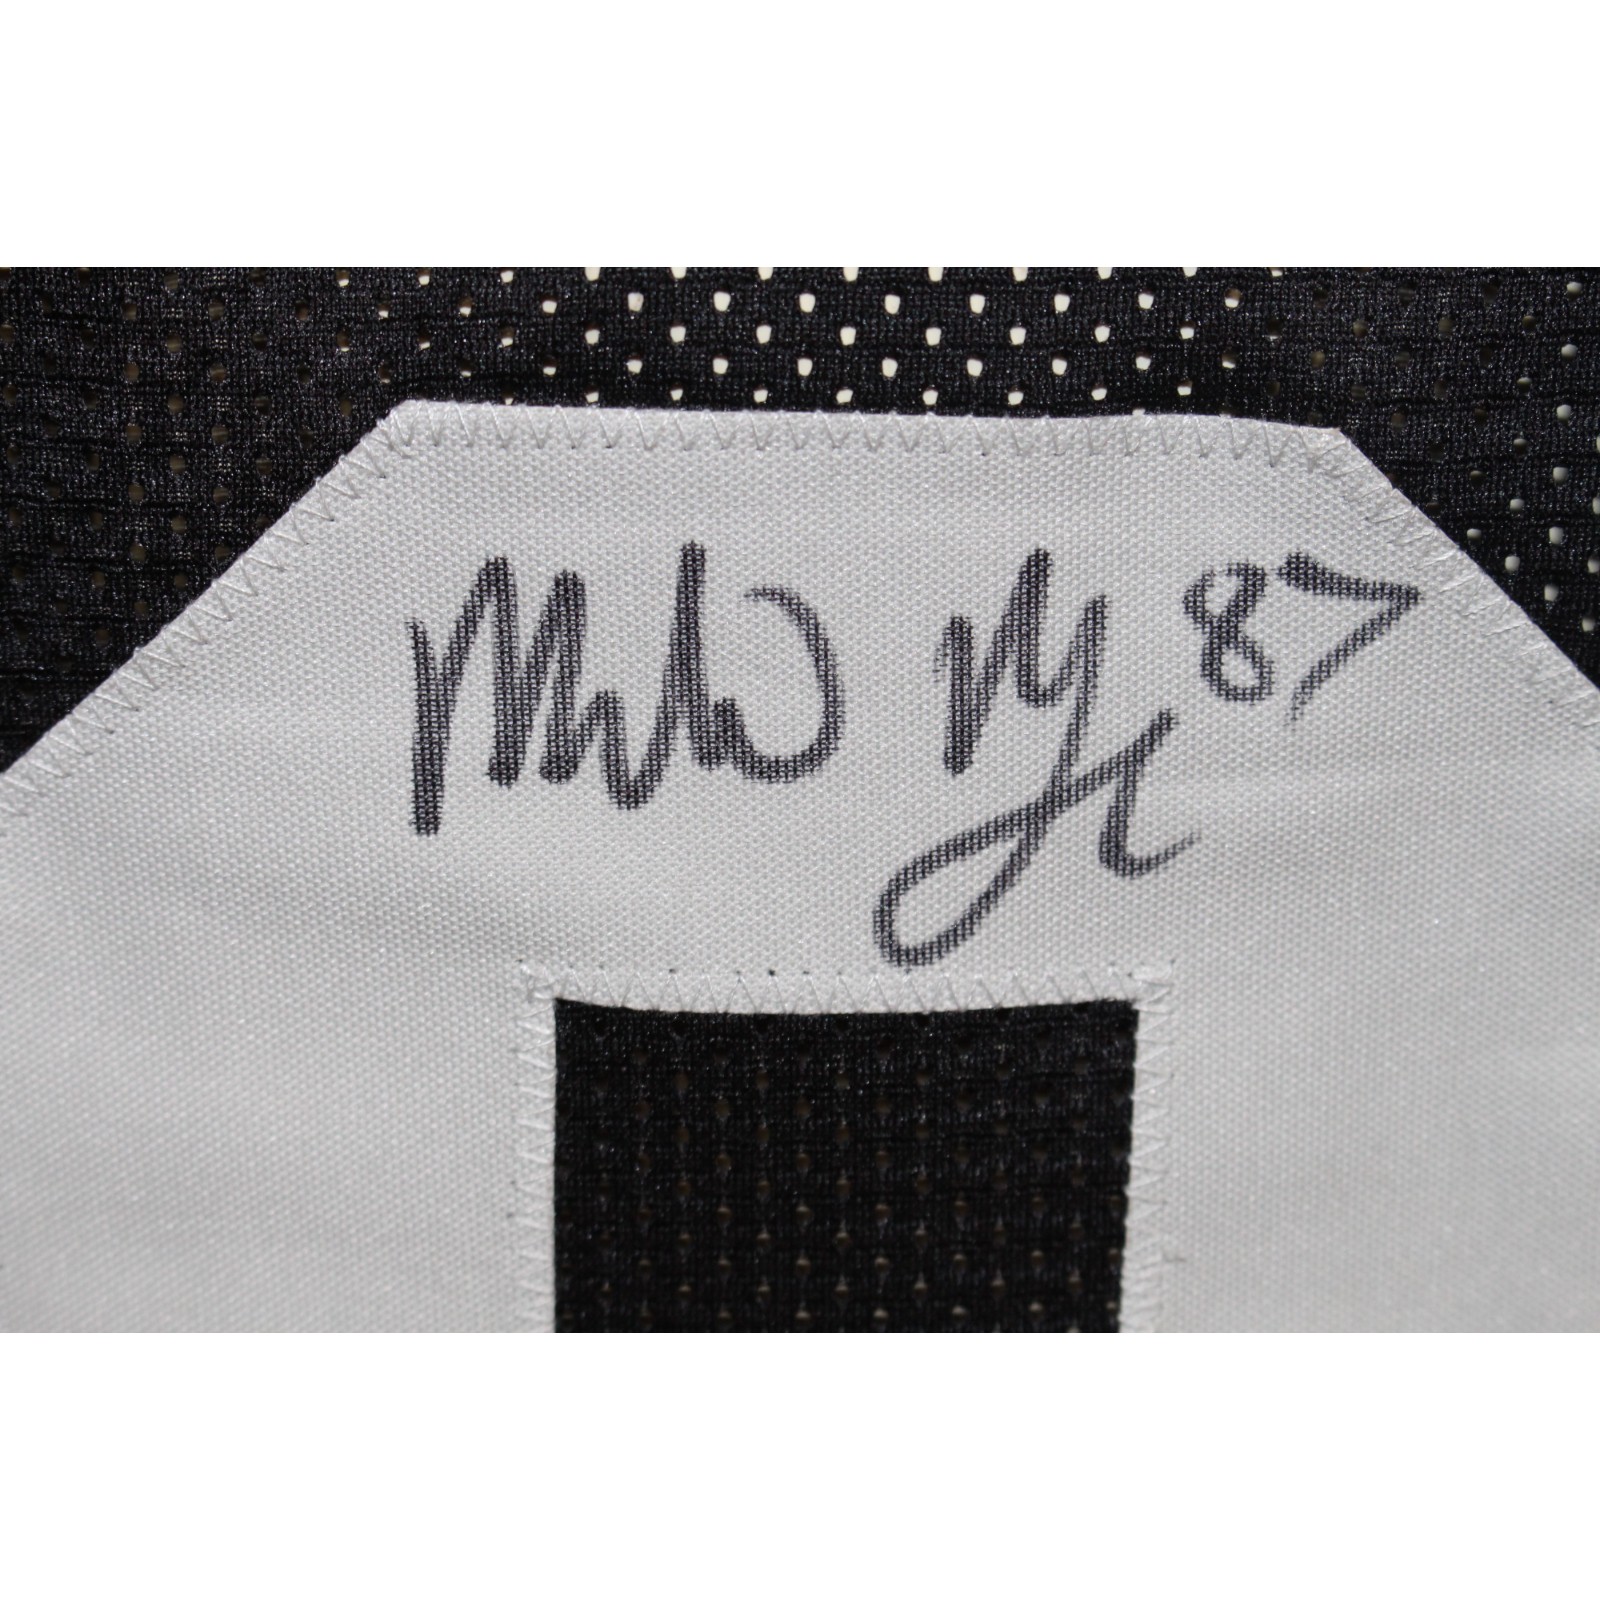 Michael Mayer Autographed/Signed Pro Style Black Jersey Insc. BAS